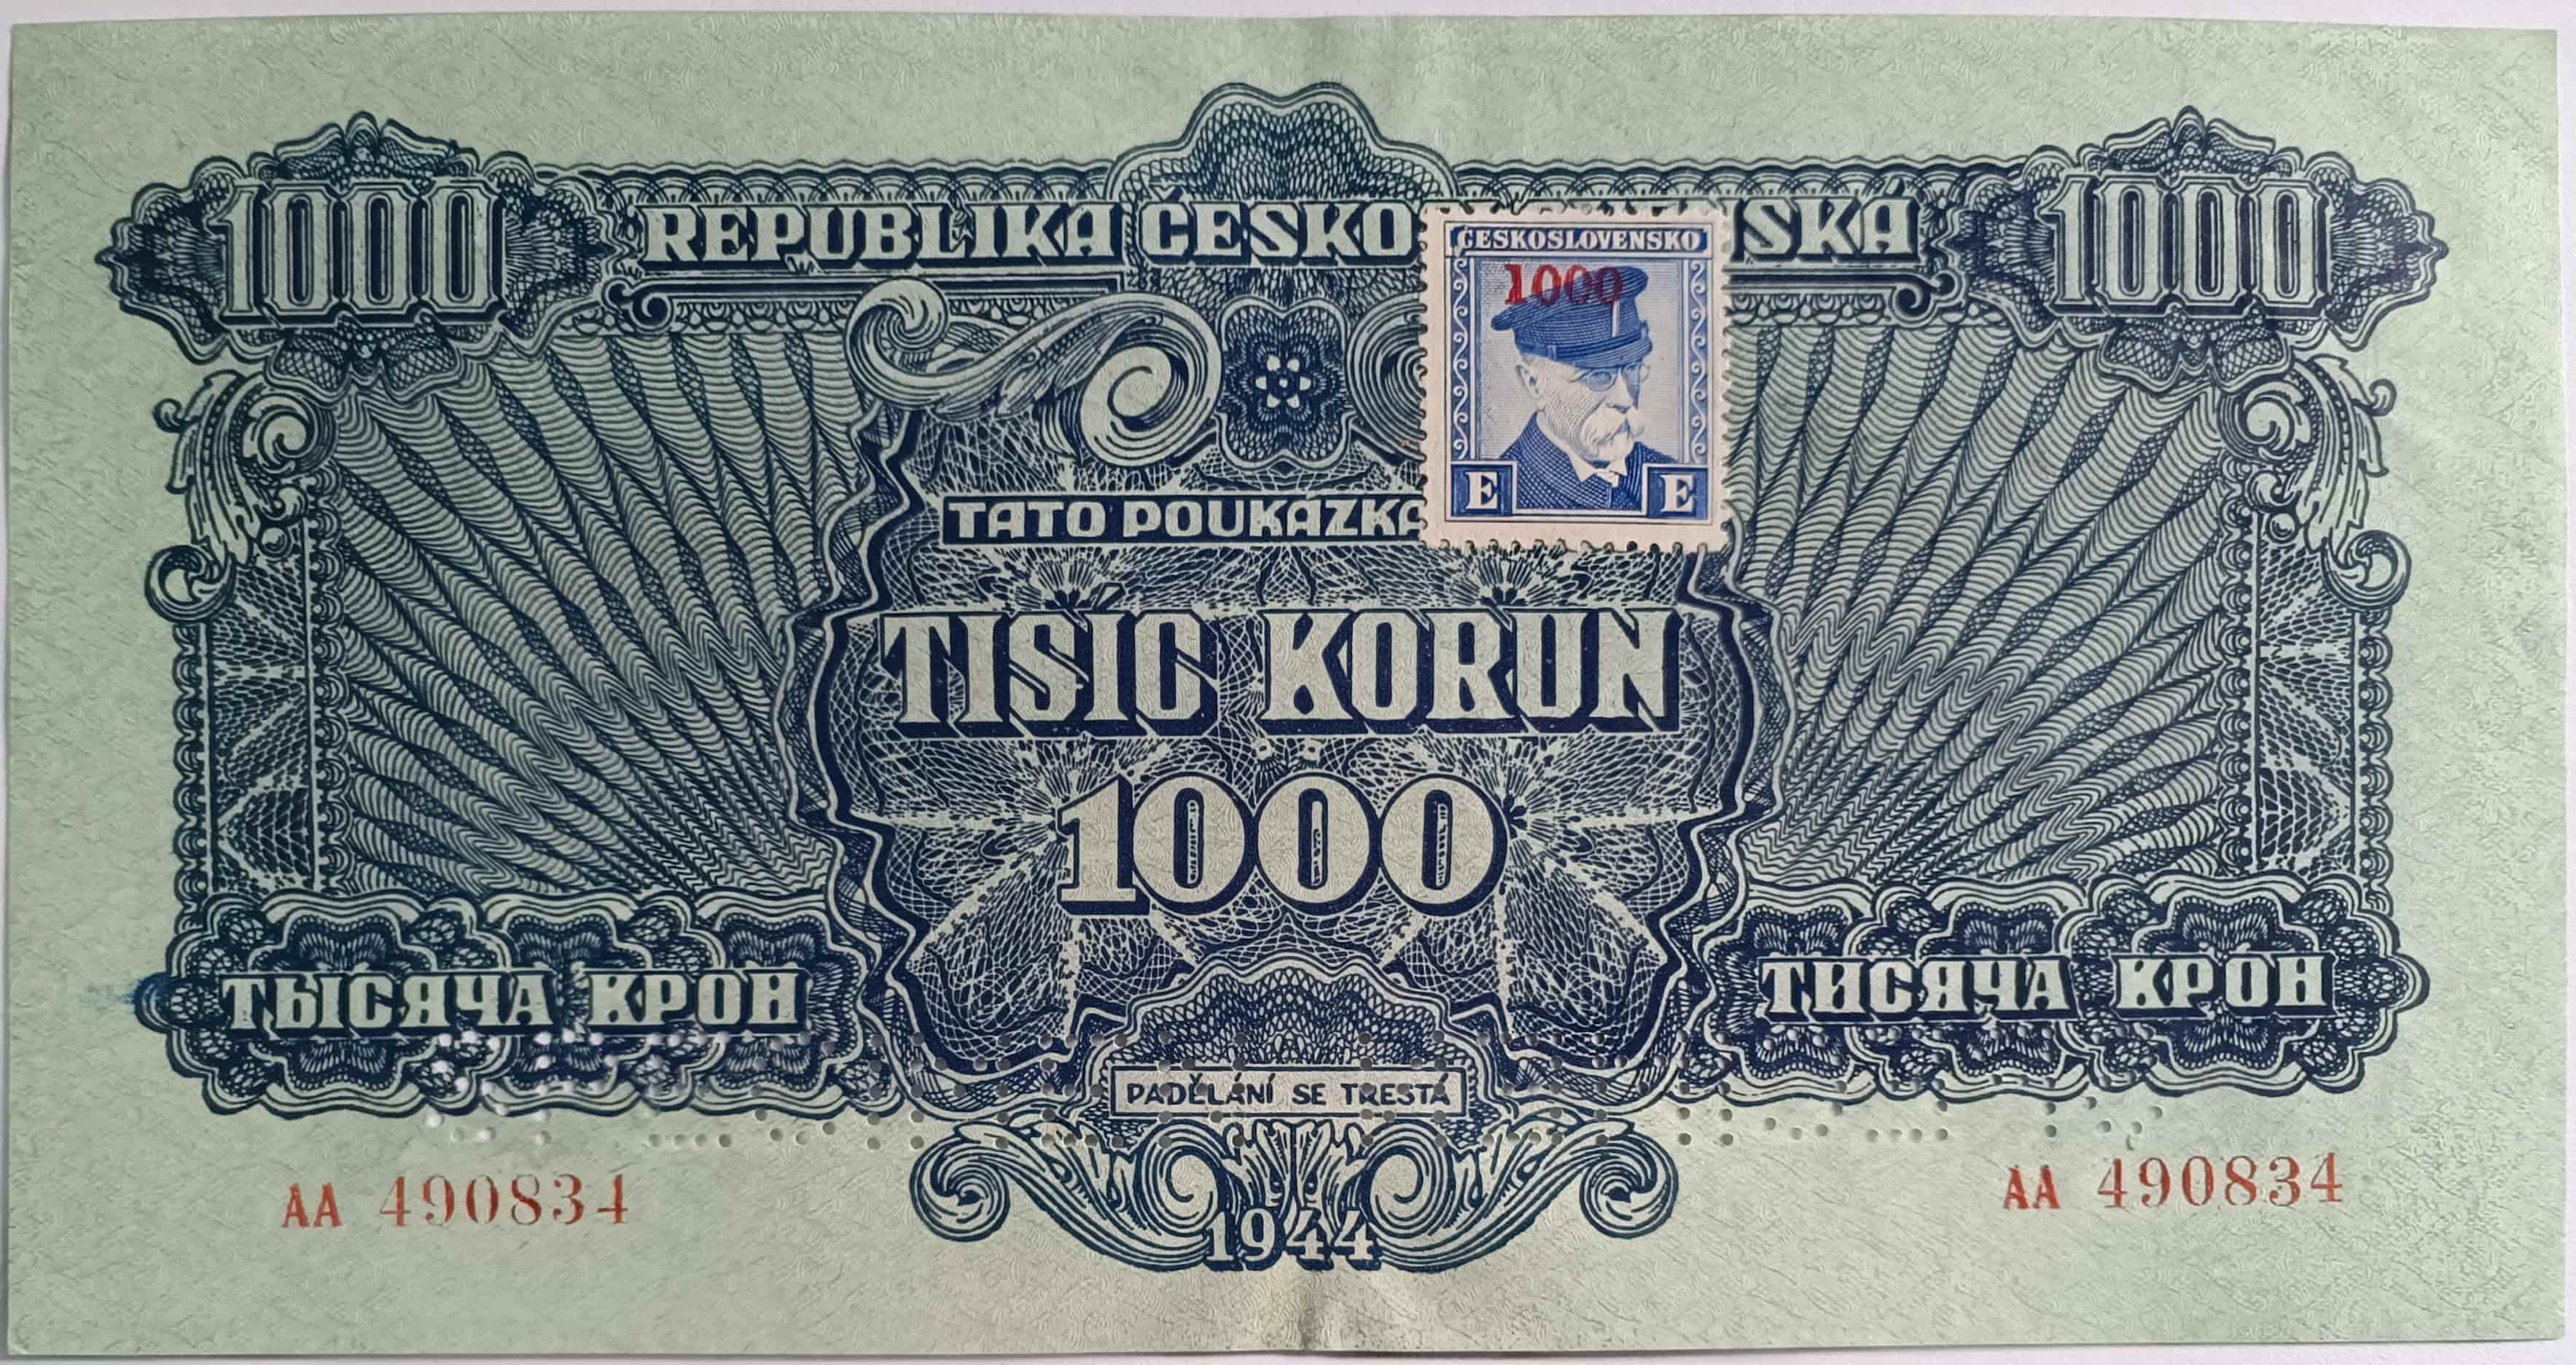 1000 korún 1944 AA kolok